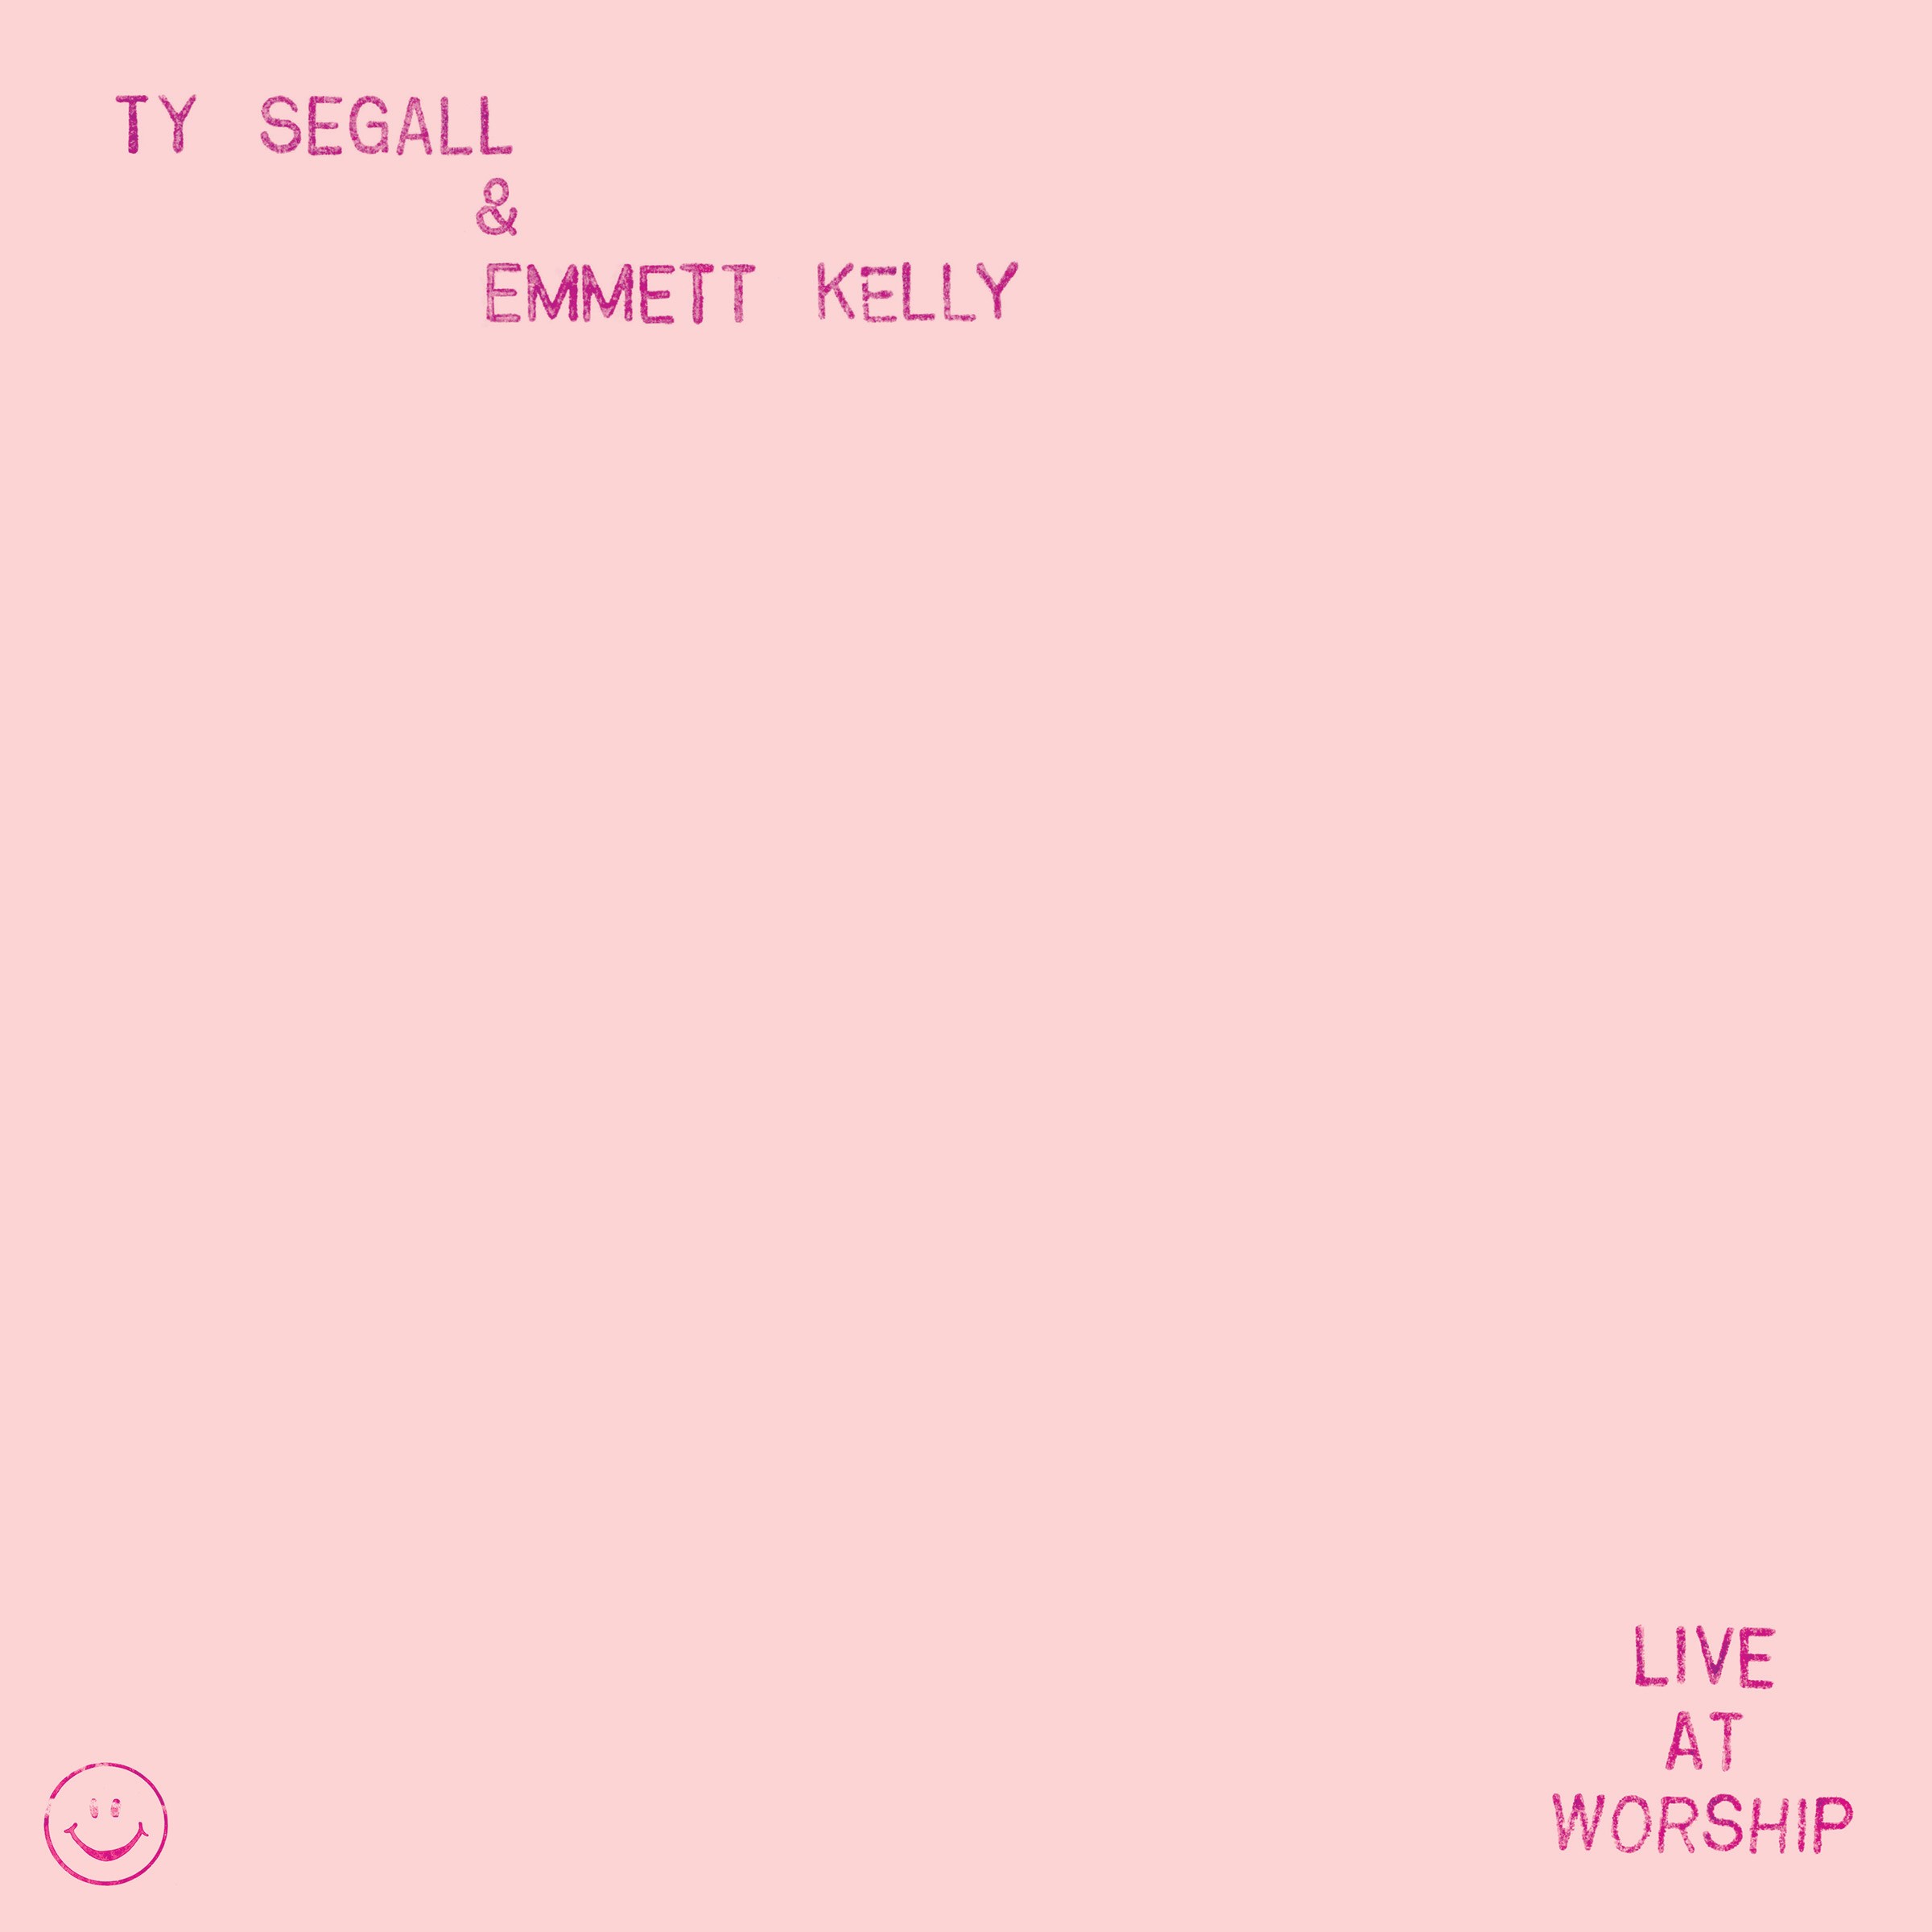 TY SEGALL & EMMETT KELLY "LIVE AT WORKSHIP"